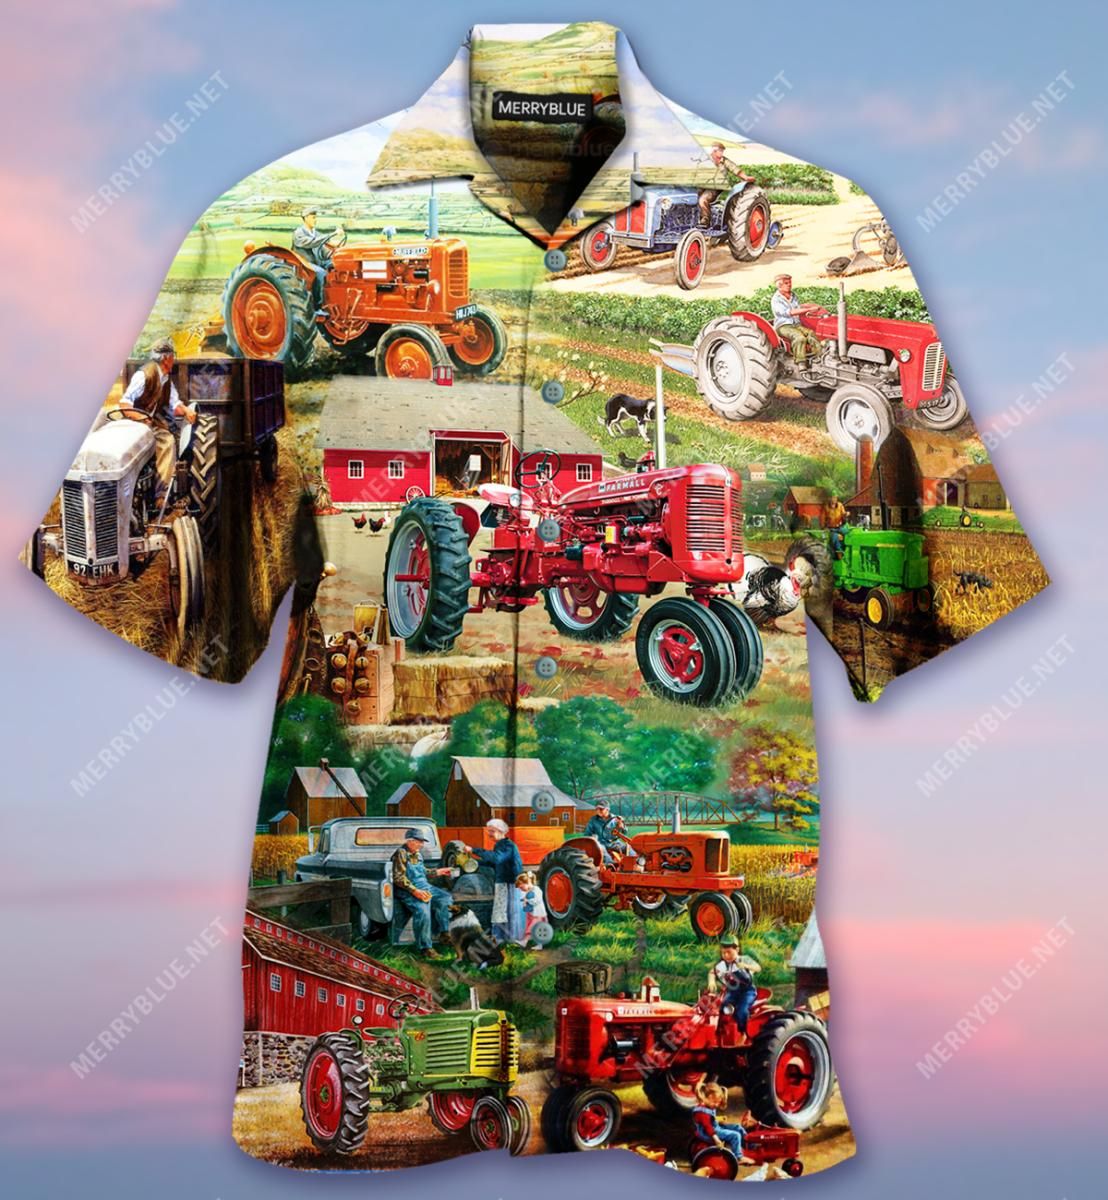 life is better on papas tractor aloha hawaiian shirt colorful short sleeve summer beach casual shirt for men and women rh4ga